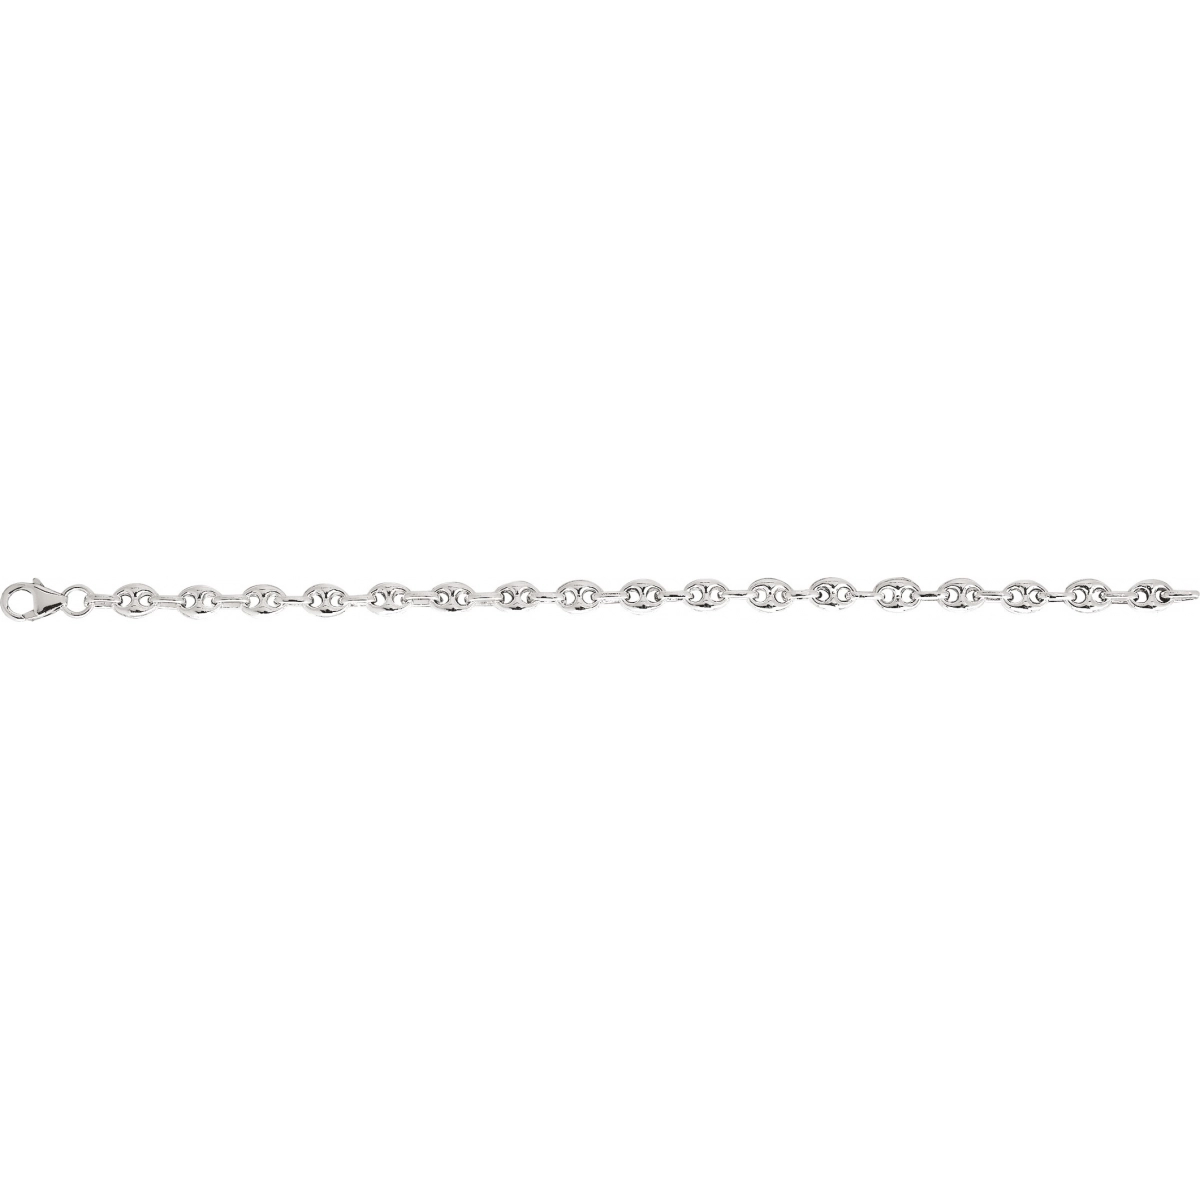 Necklace rh925 Silver Lua Blanca  454417J - Size 60